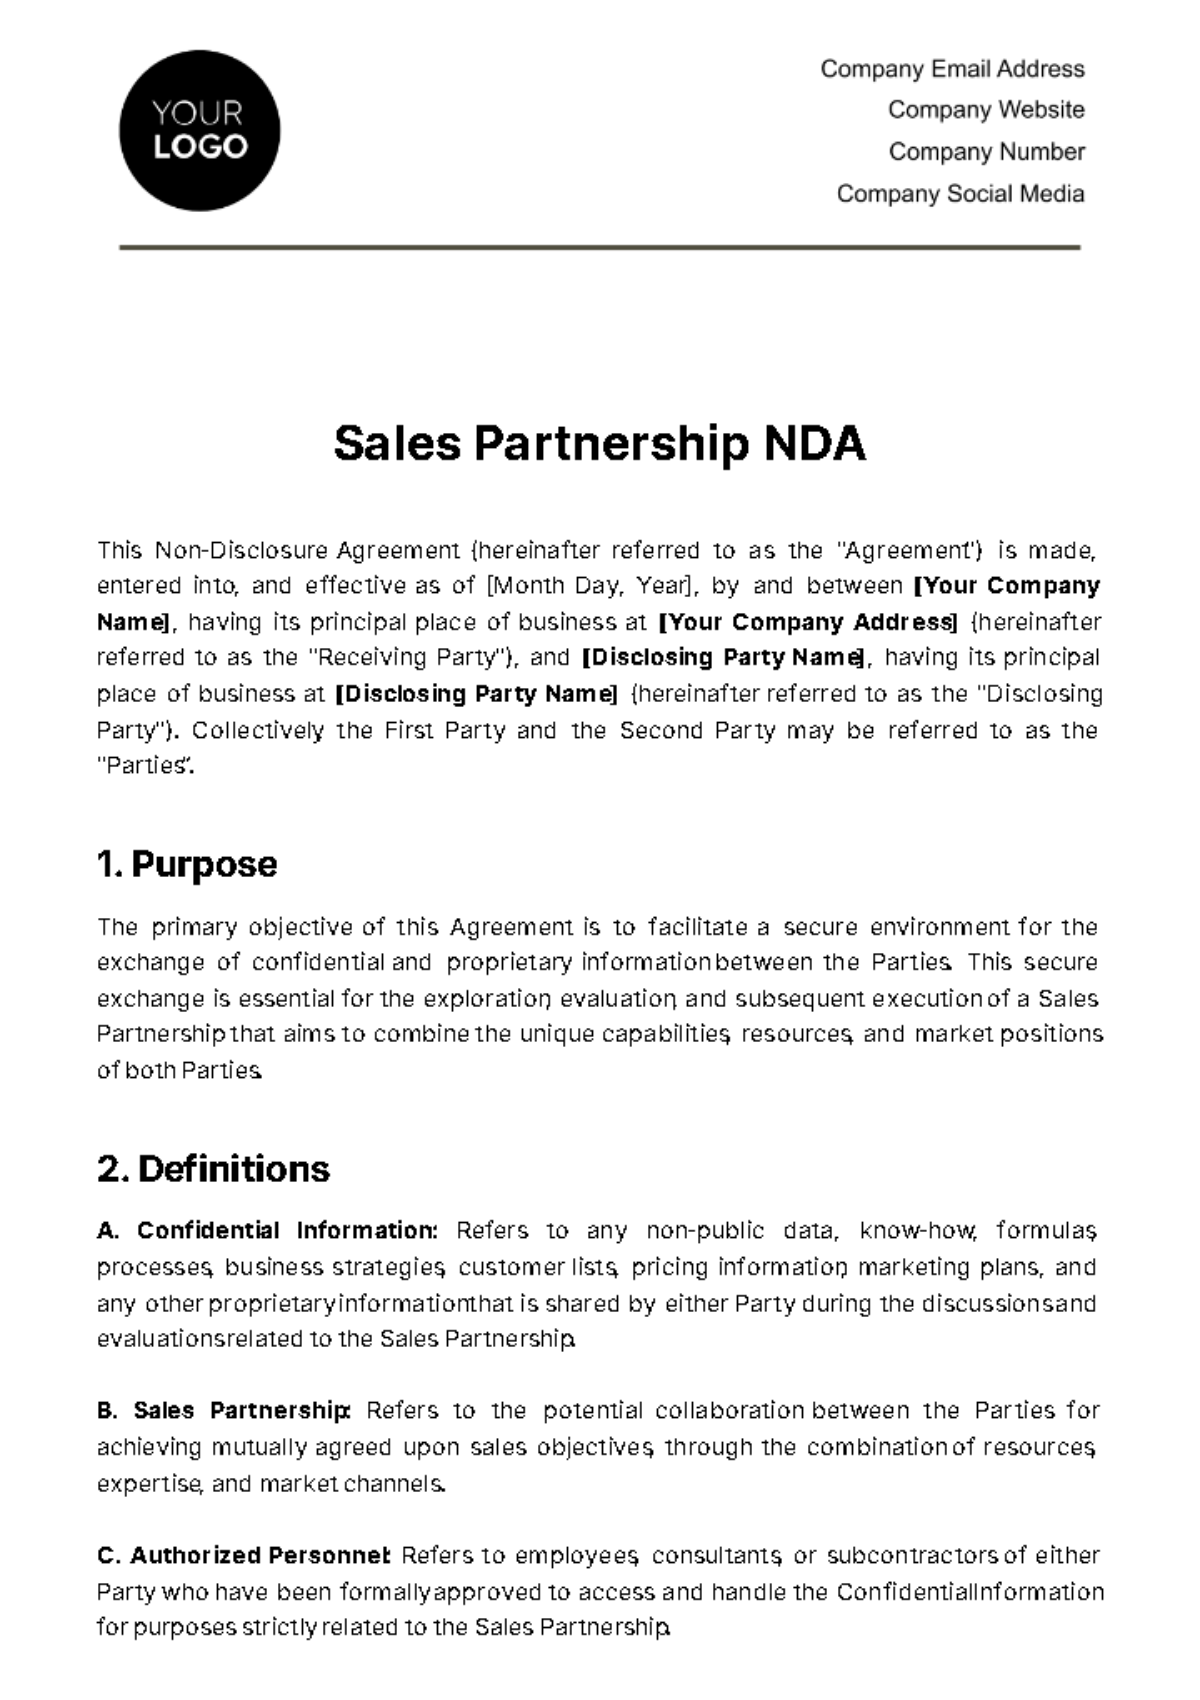 Free Sales Partnership NDA Template